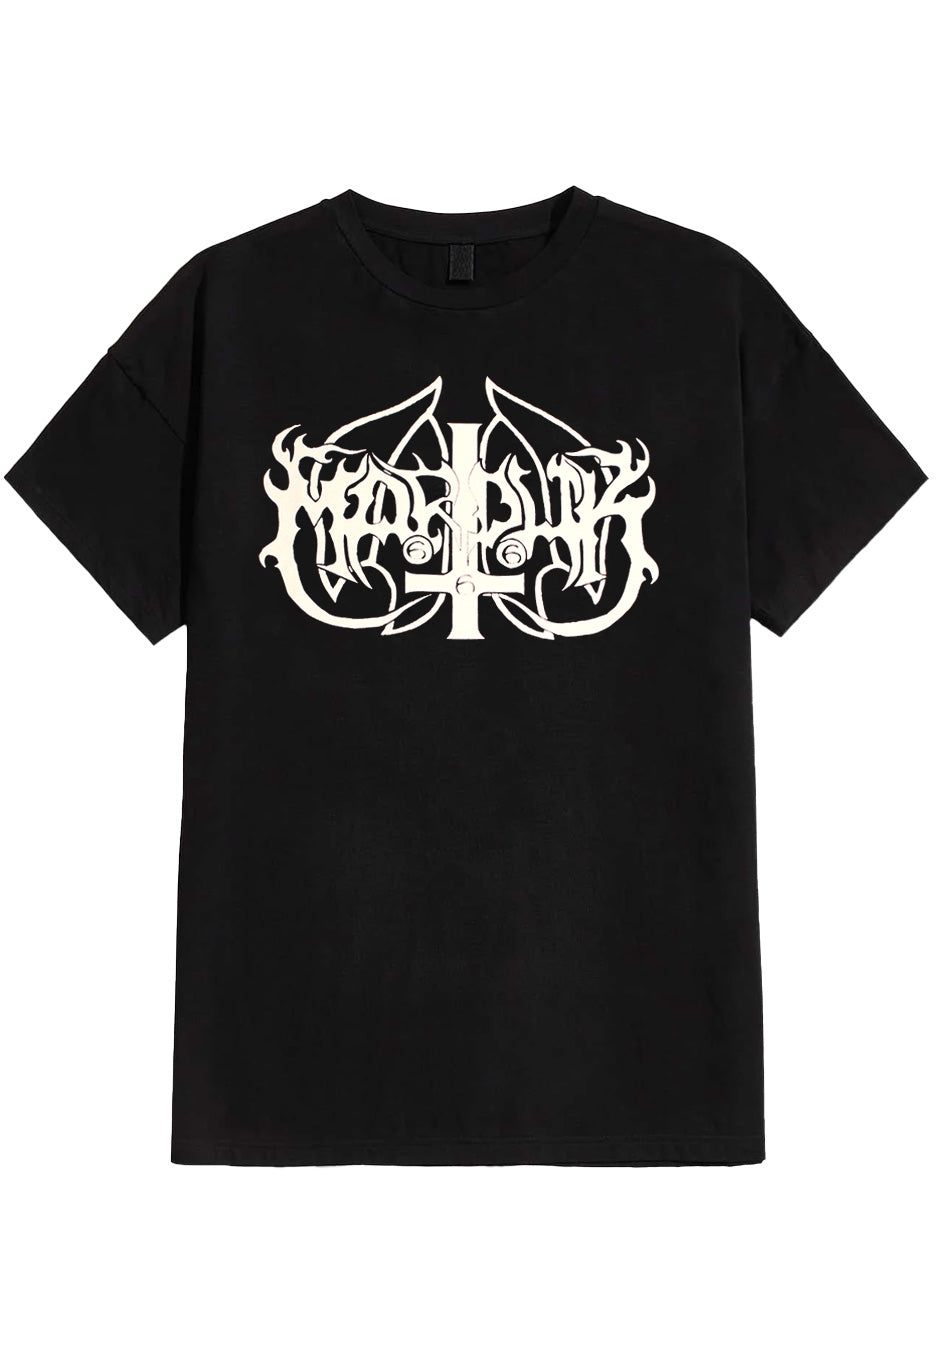 Marduk - Norrkoping - T-Shirt